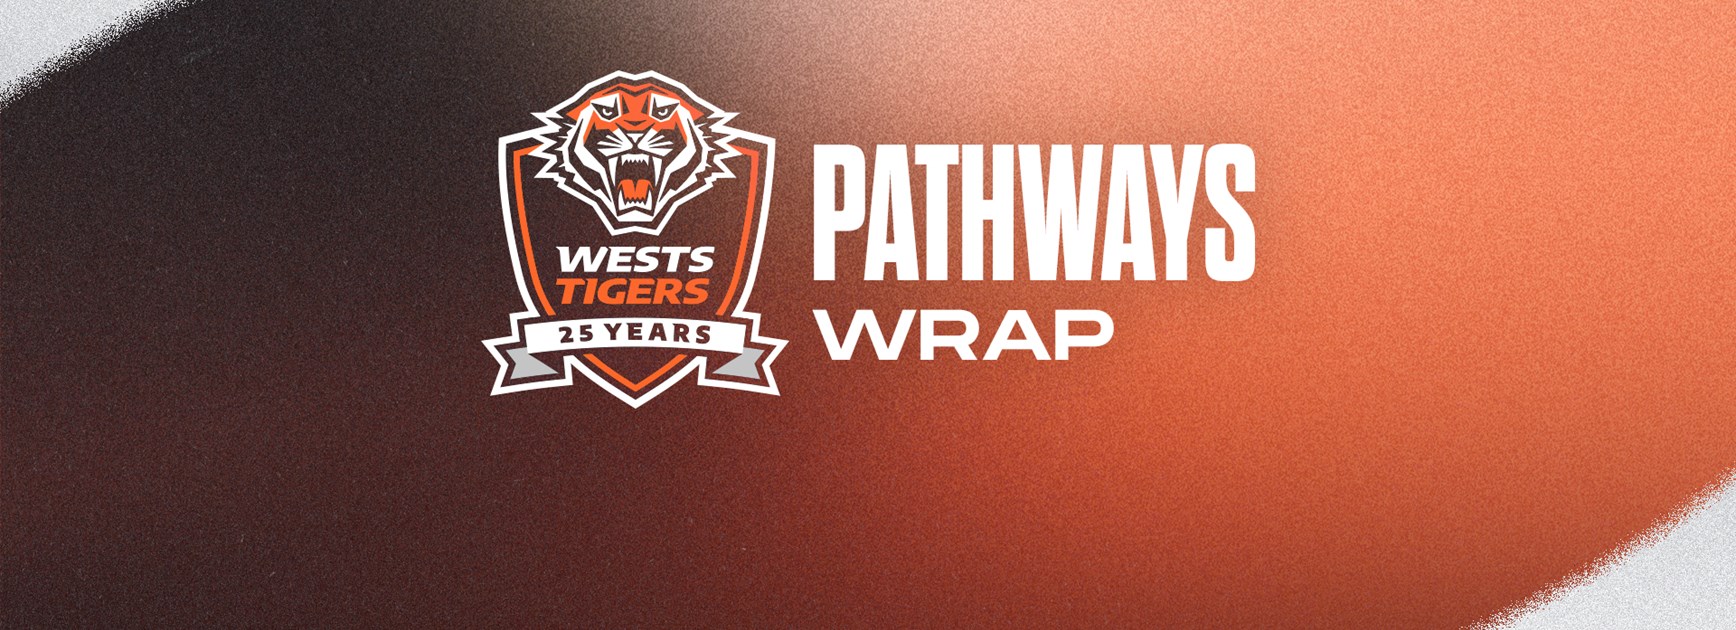 Pathways Wrap: Round 9